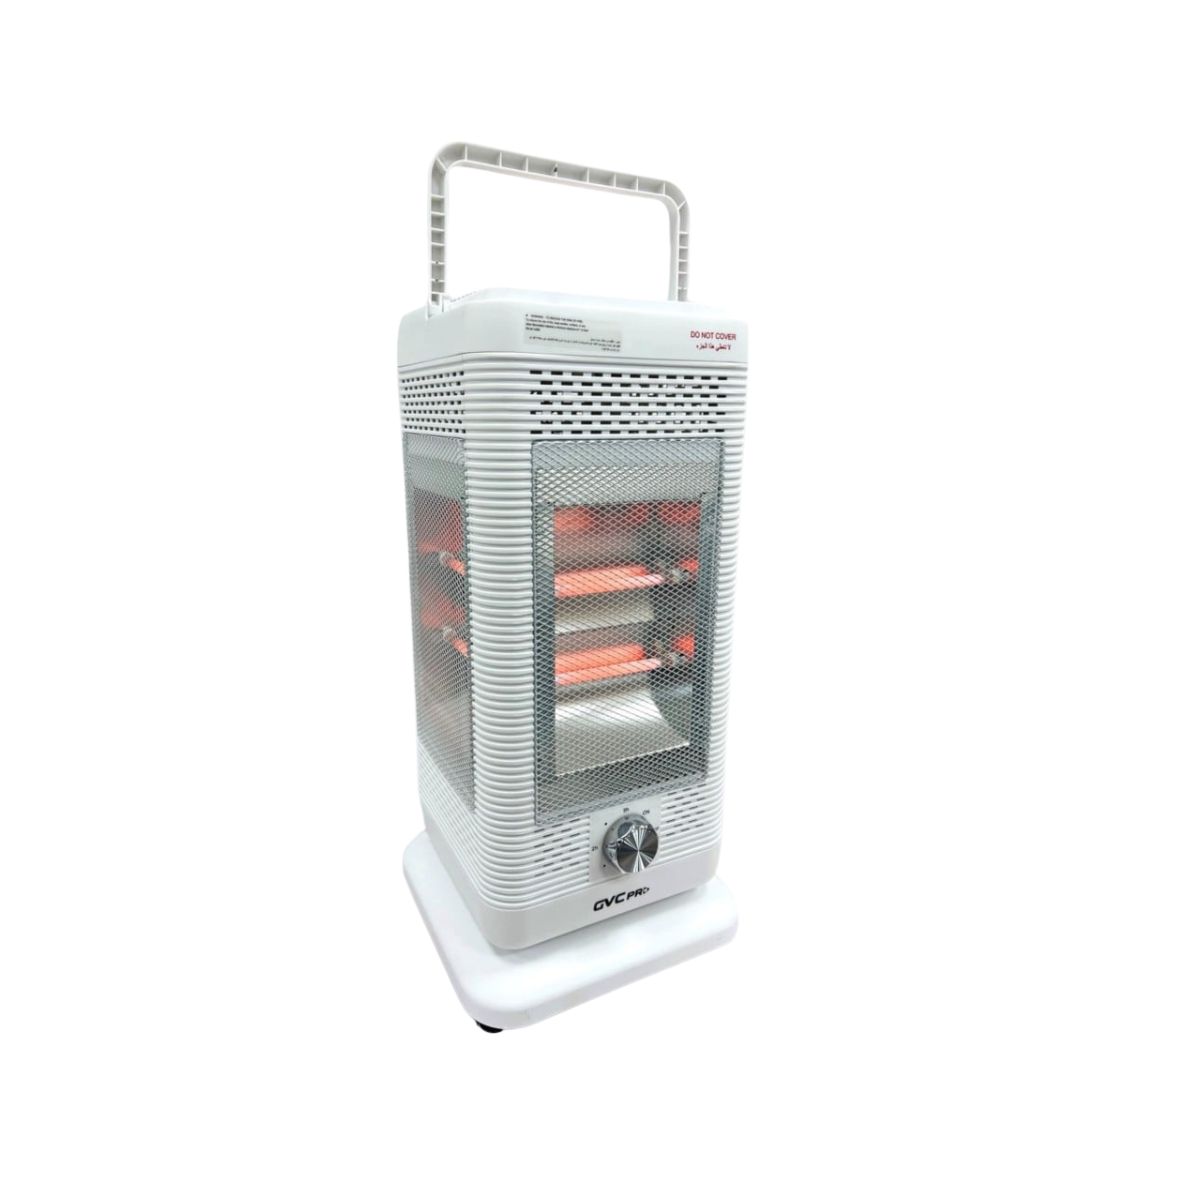 GVC Pro Electric Heater Decor, 2000W, White - GVCHT-1804